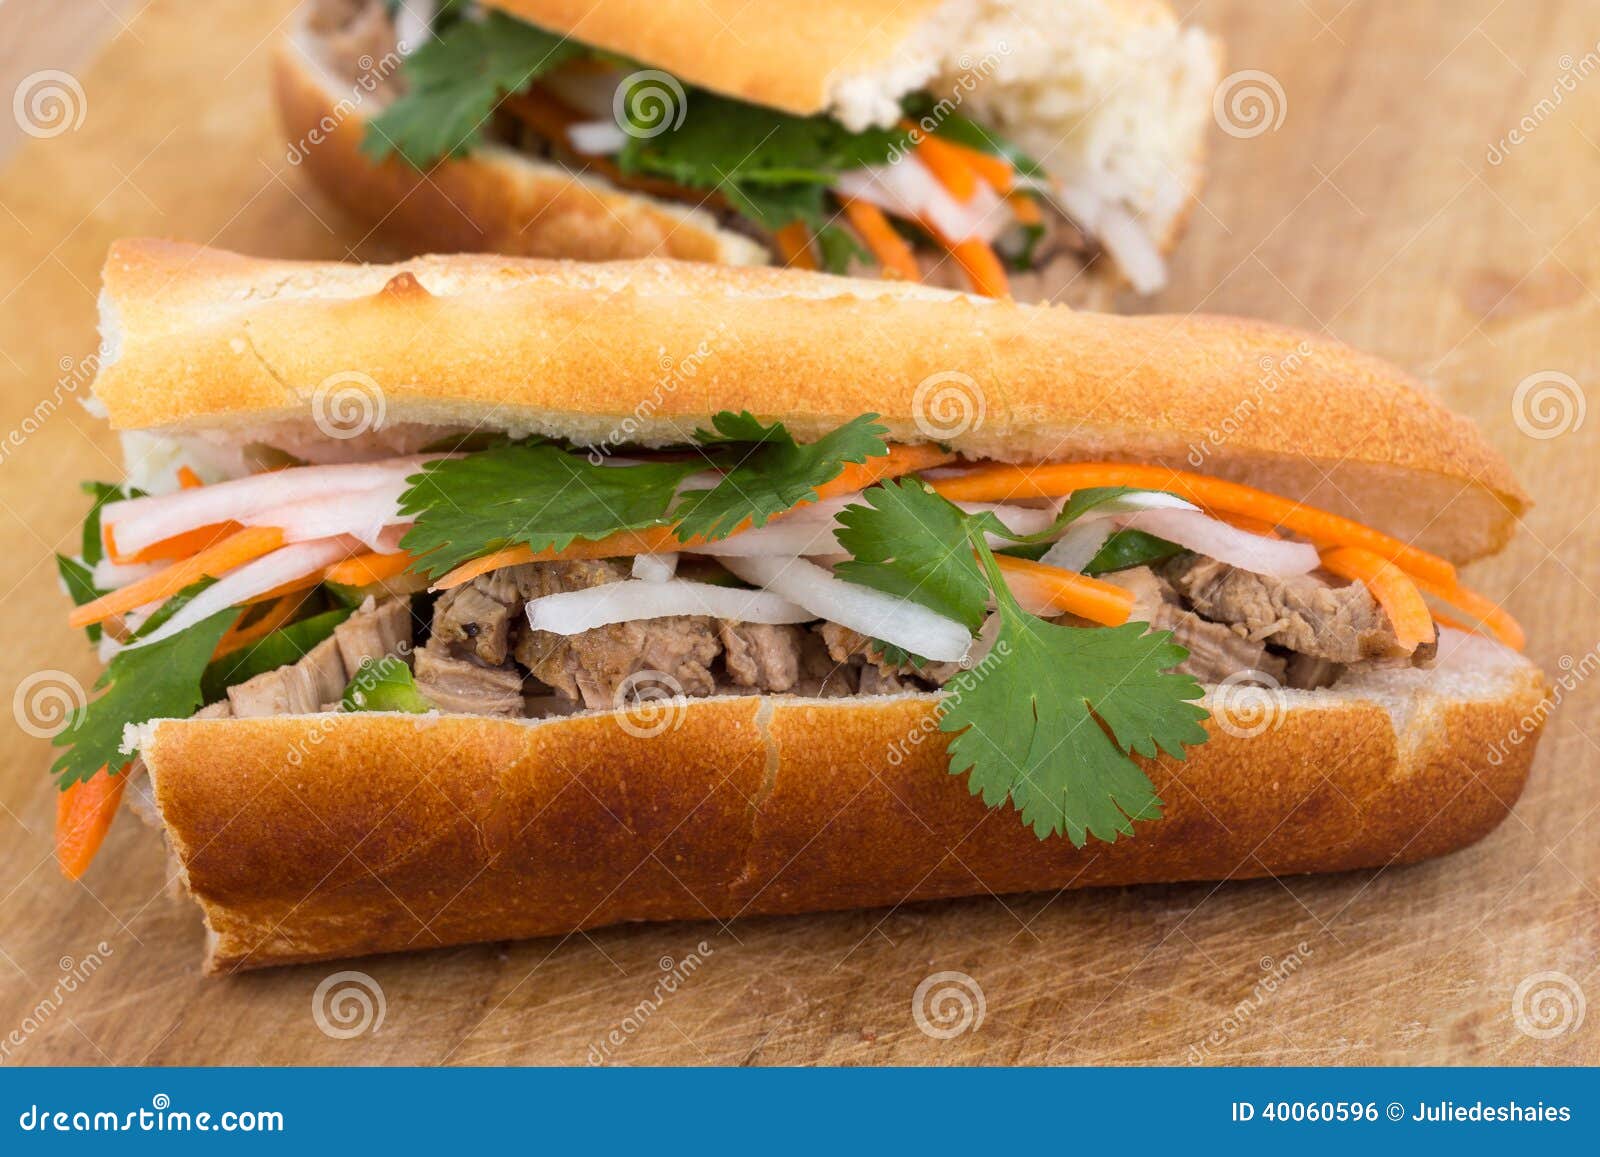 banh mi vietnamese pork sandwich